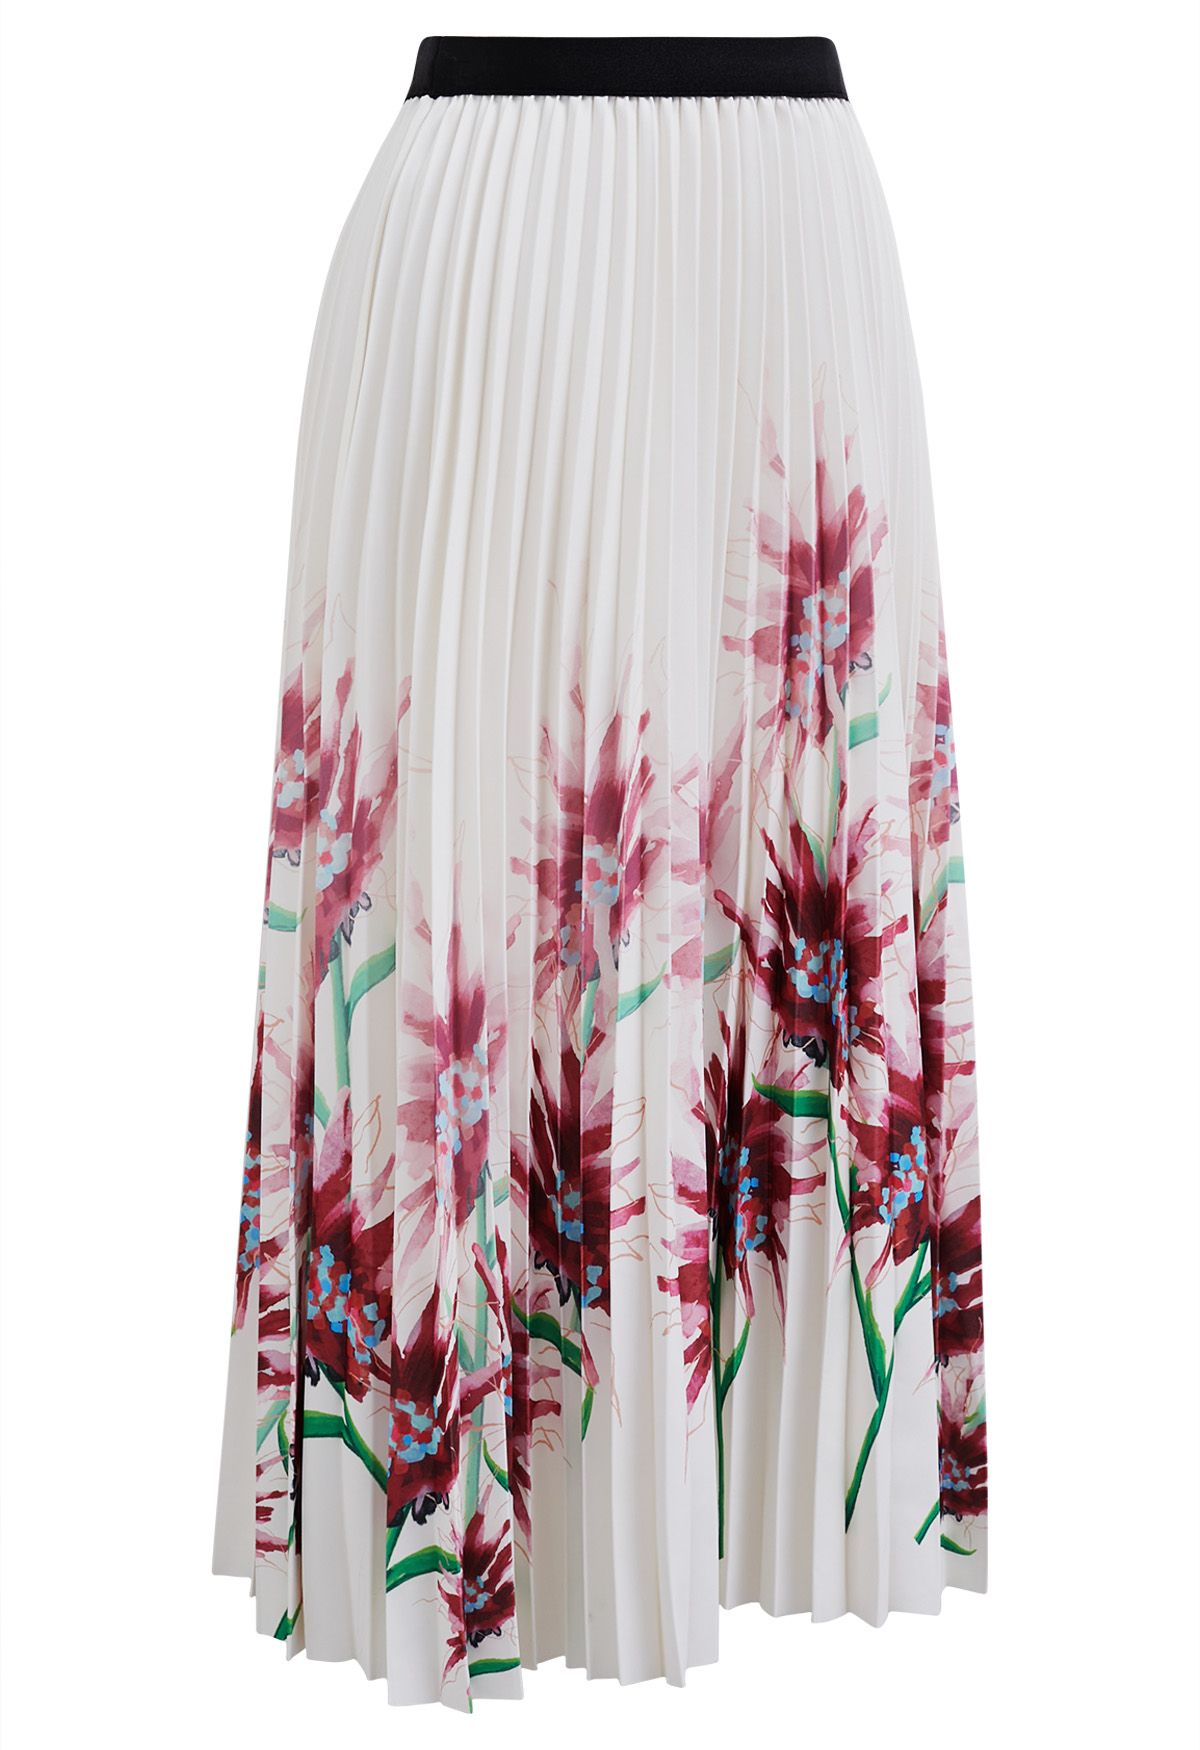 Watercolor Floral Pleated Midi Skirt in Burgundy